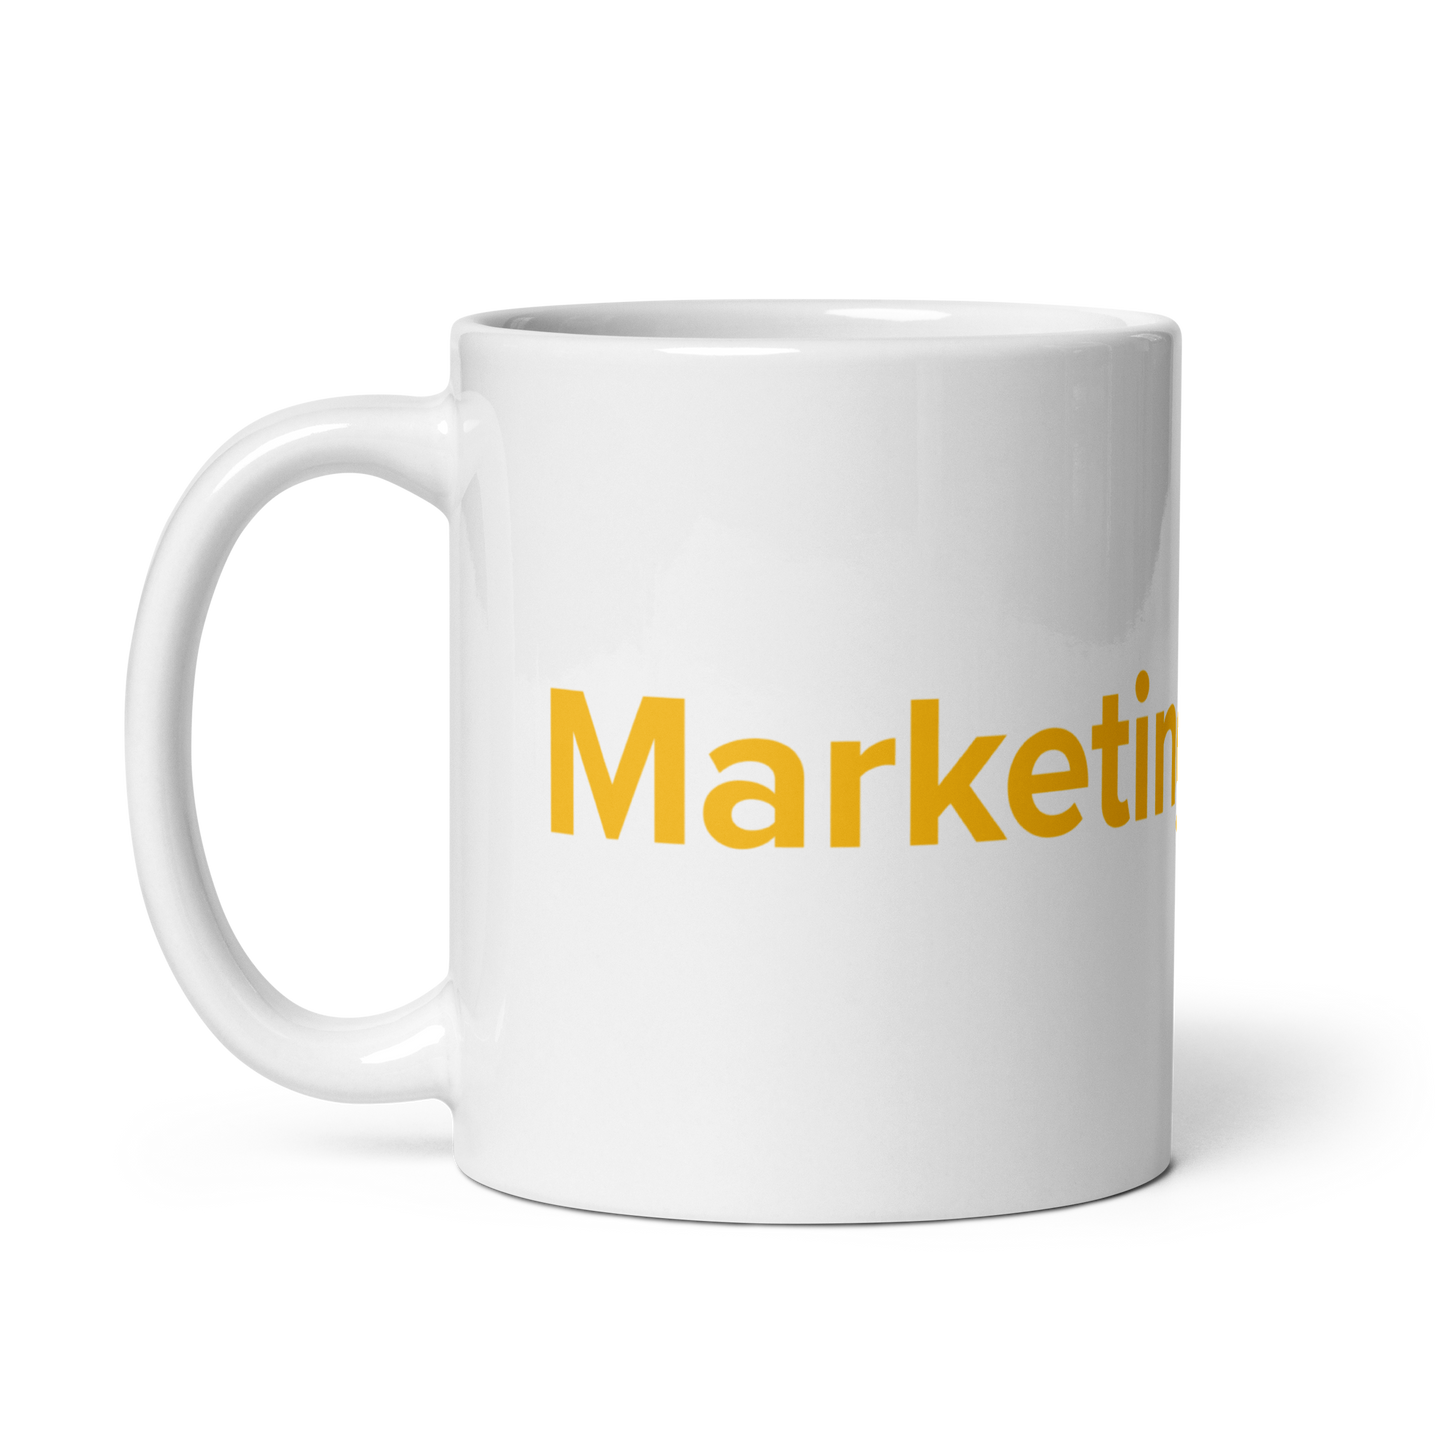 Marketing Mug